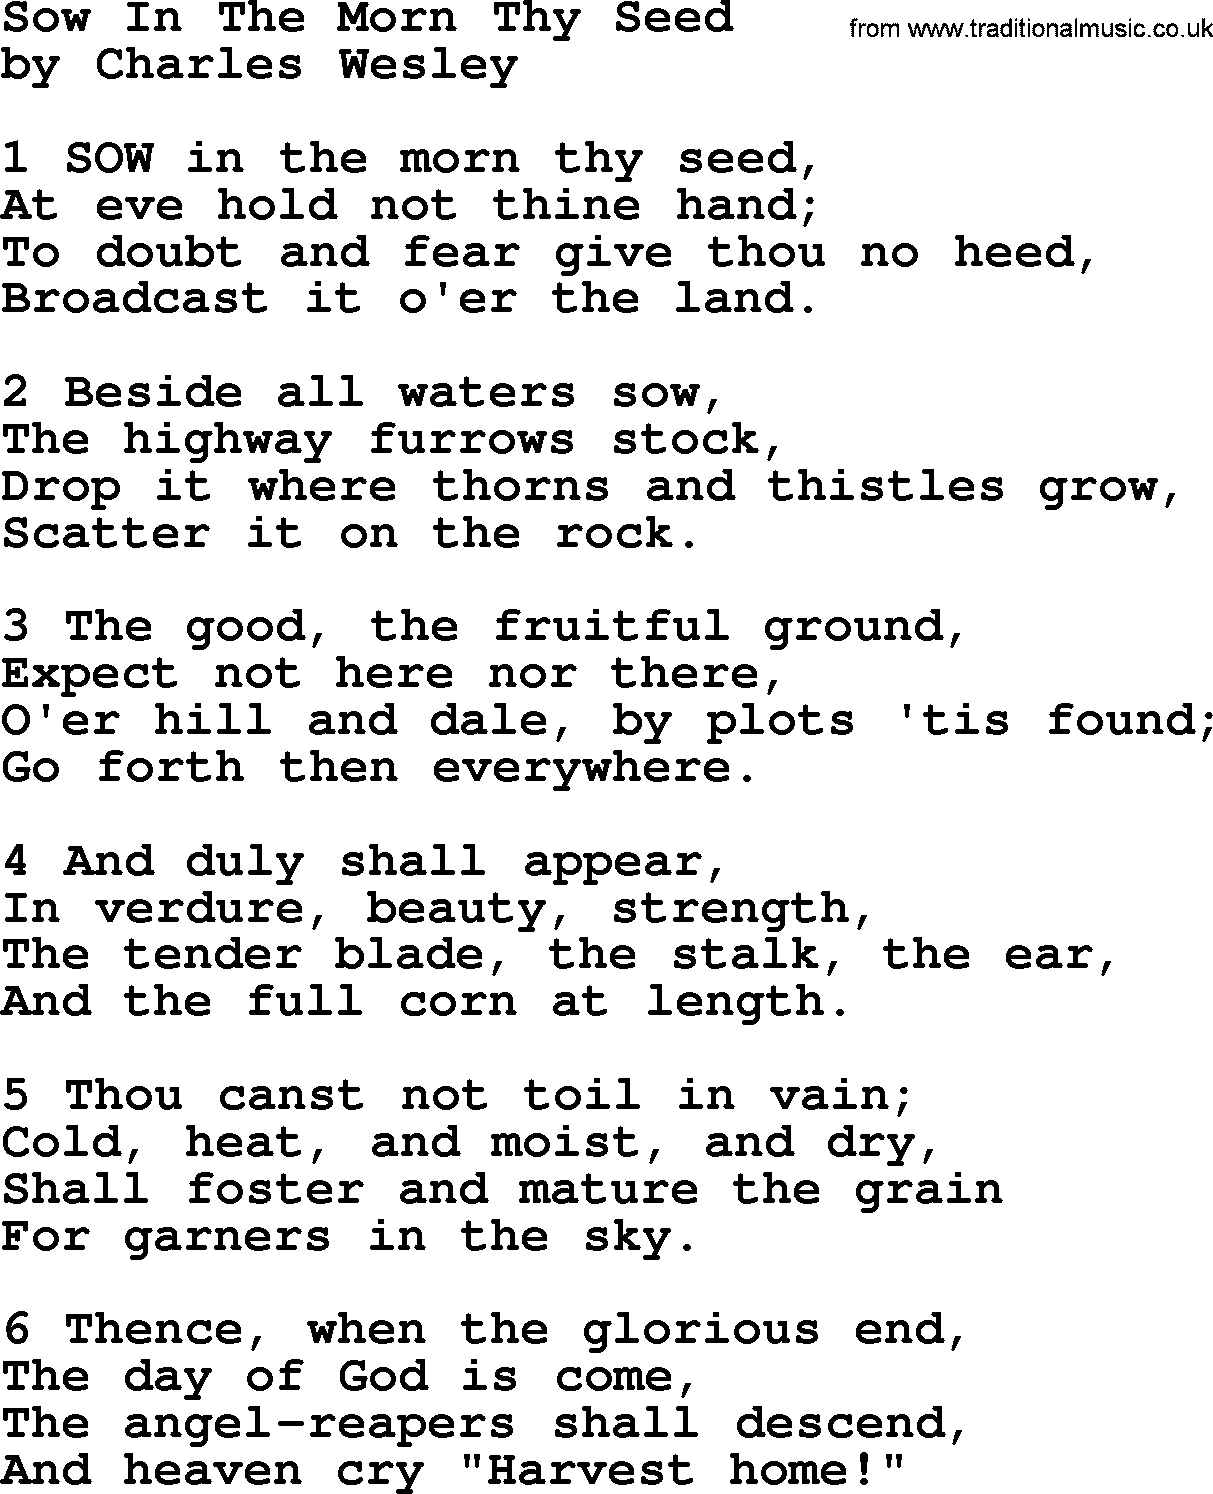 Charles Wesley hymn: Sow In The Morn Thy Seed, lyrics